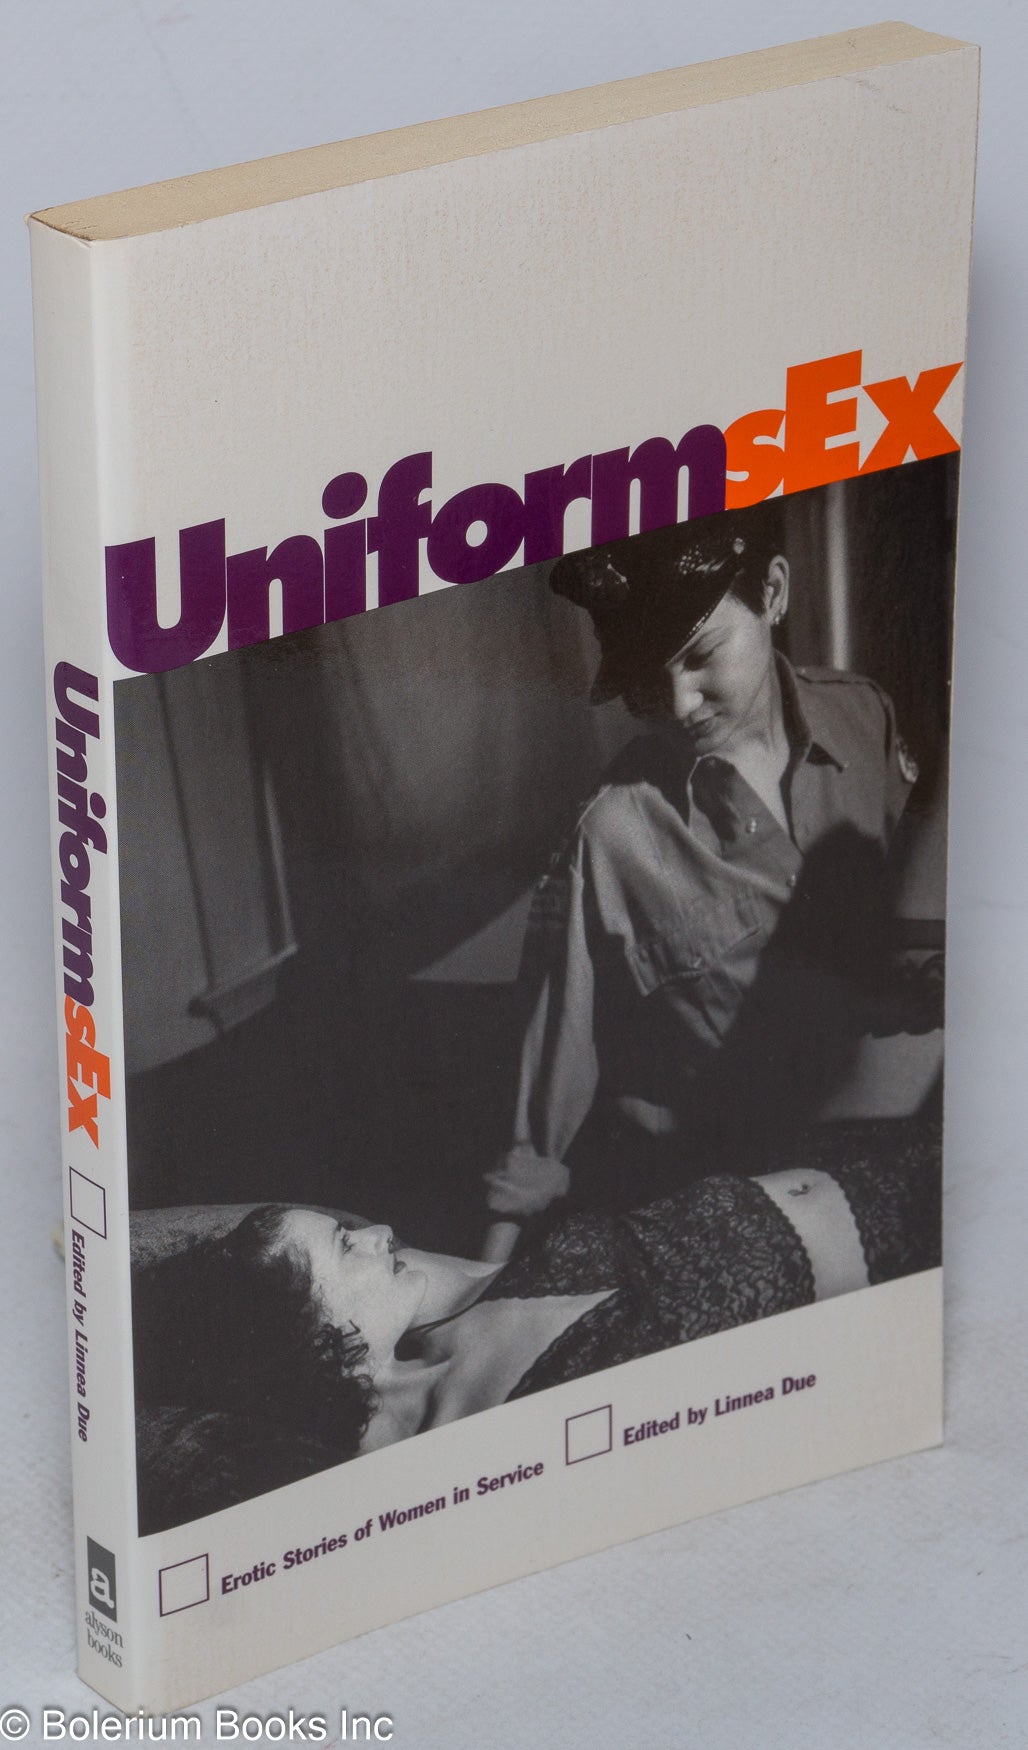 Uniform Sex erotic stories of women in service Linnea Due, Lauren Dockett Cecila Tan, Yolanda Wallace image